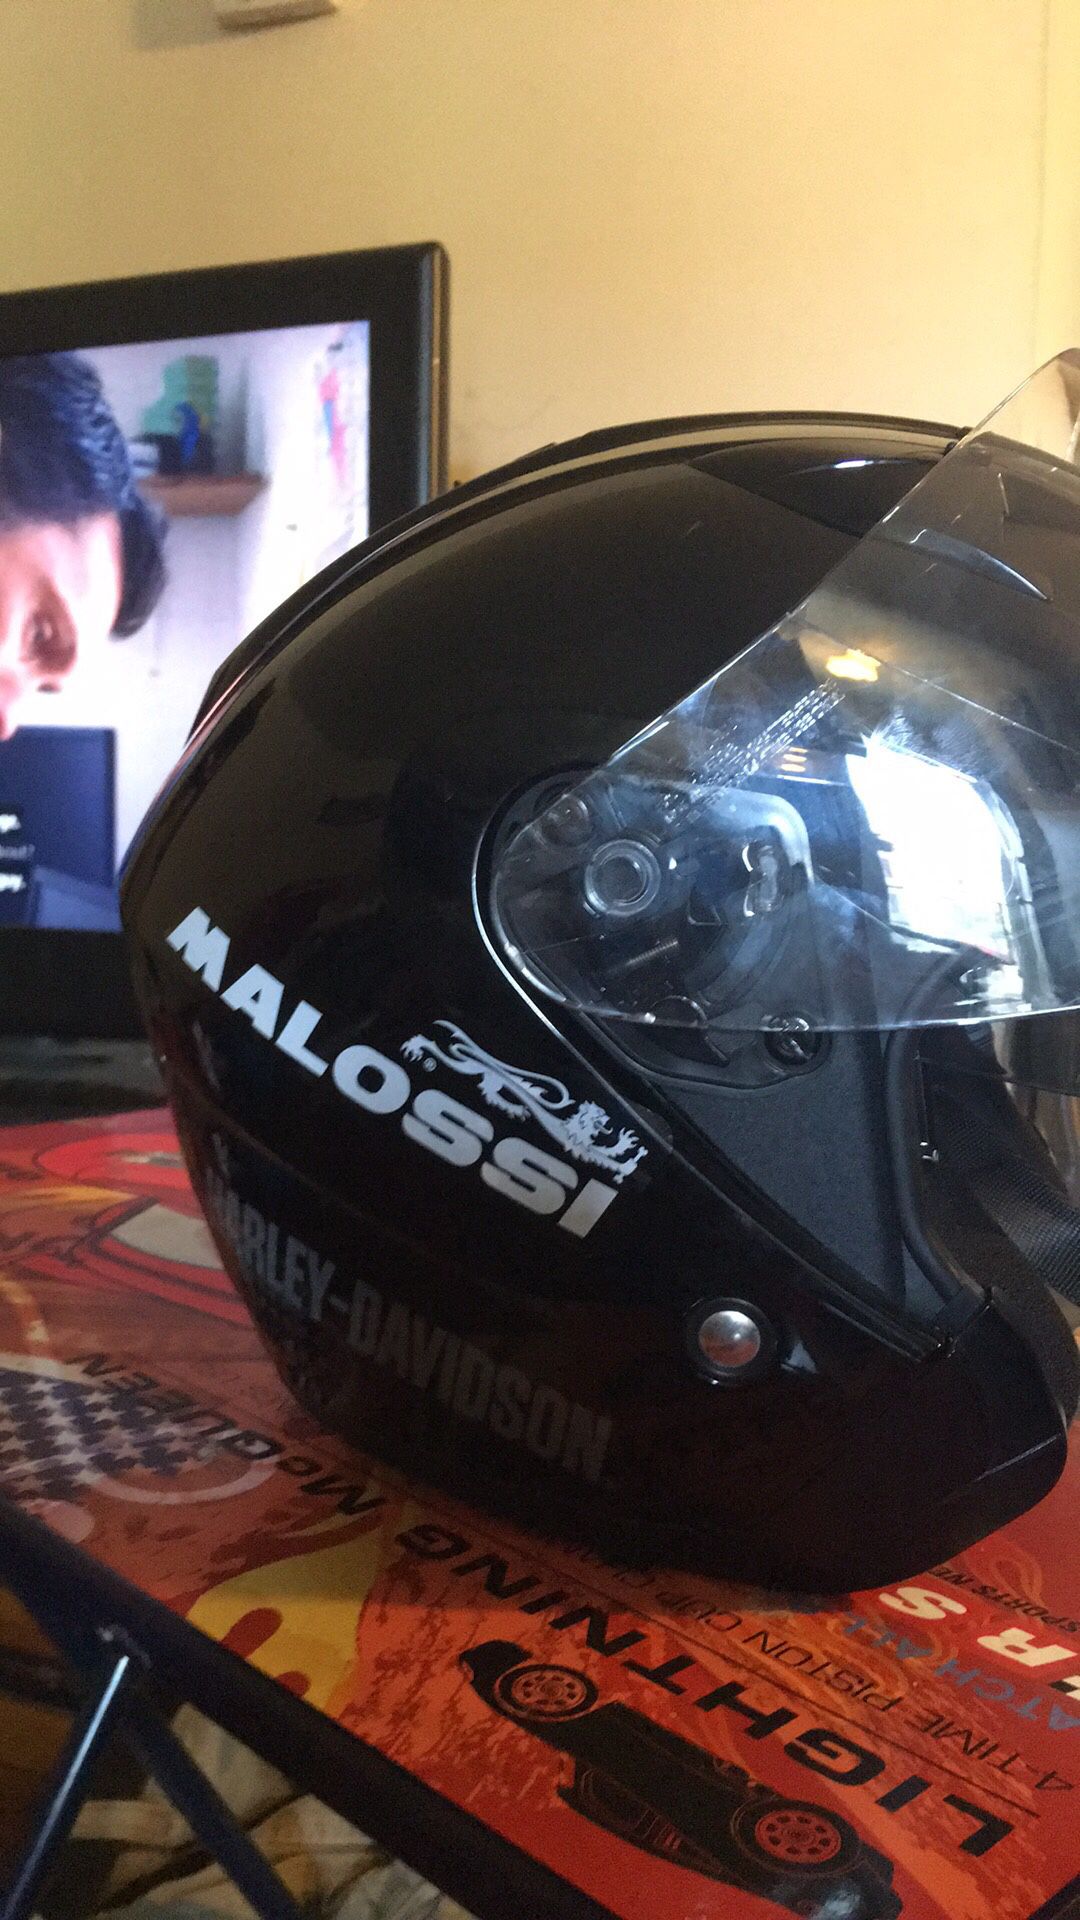 Harley Davidson helmet